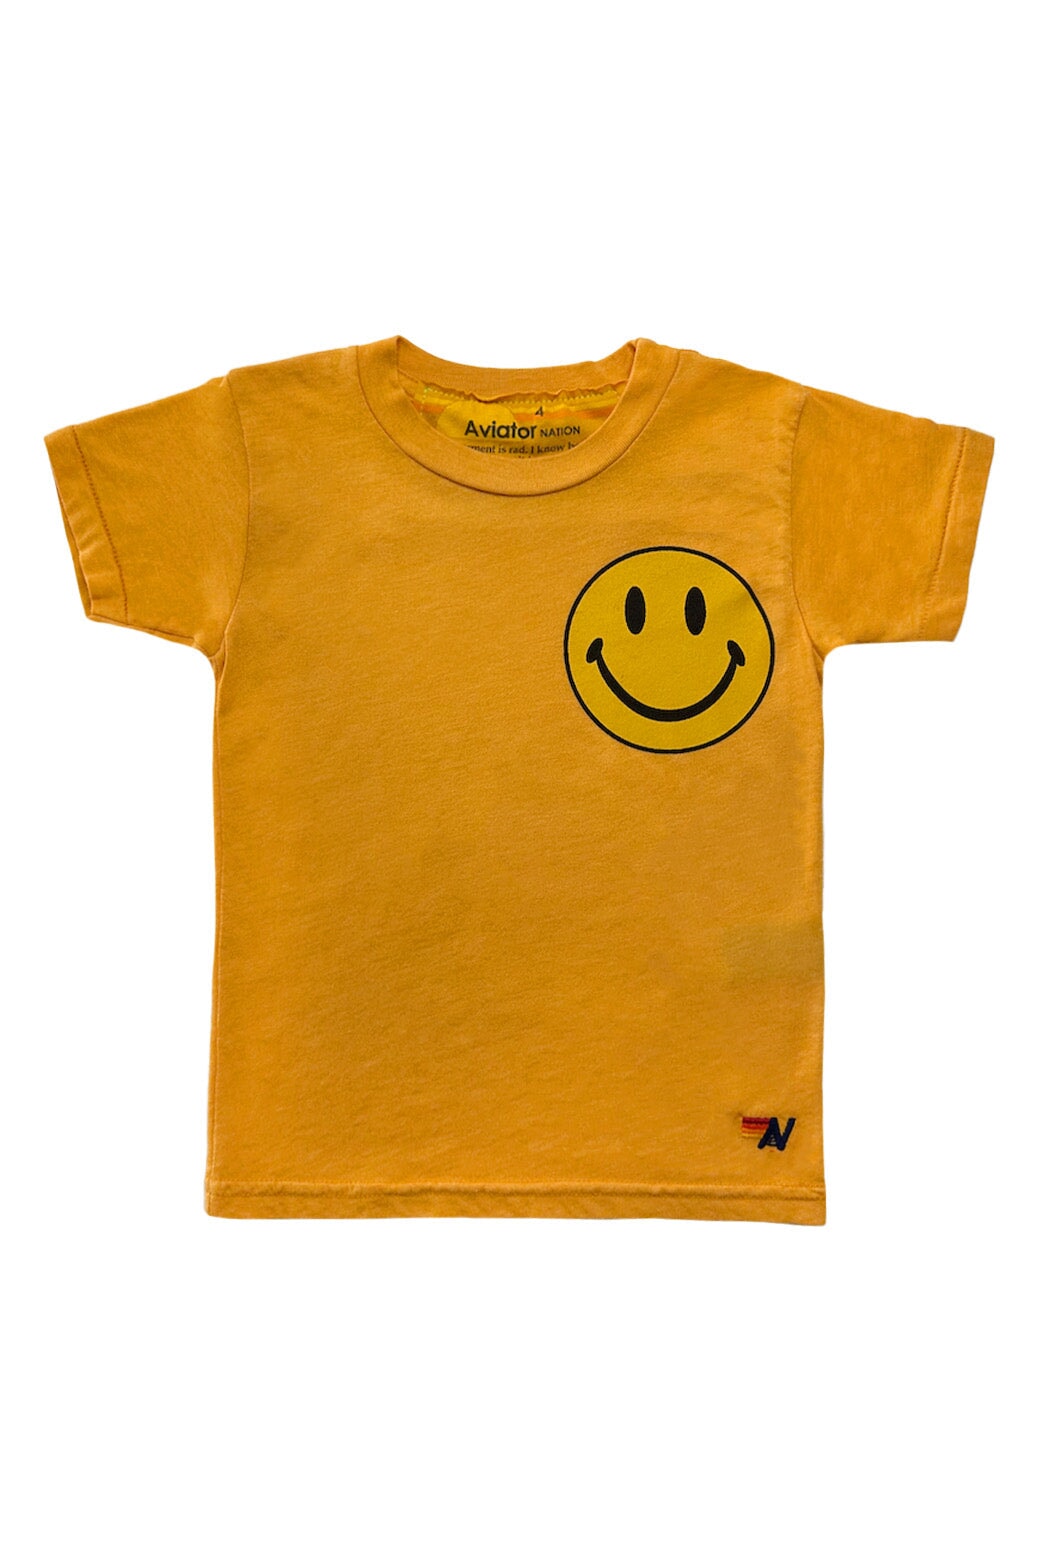 KID'S SMILEY 2 TEE - GOLD Kid's Tee Aviator Nation 